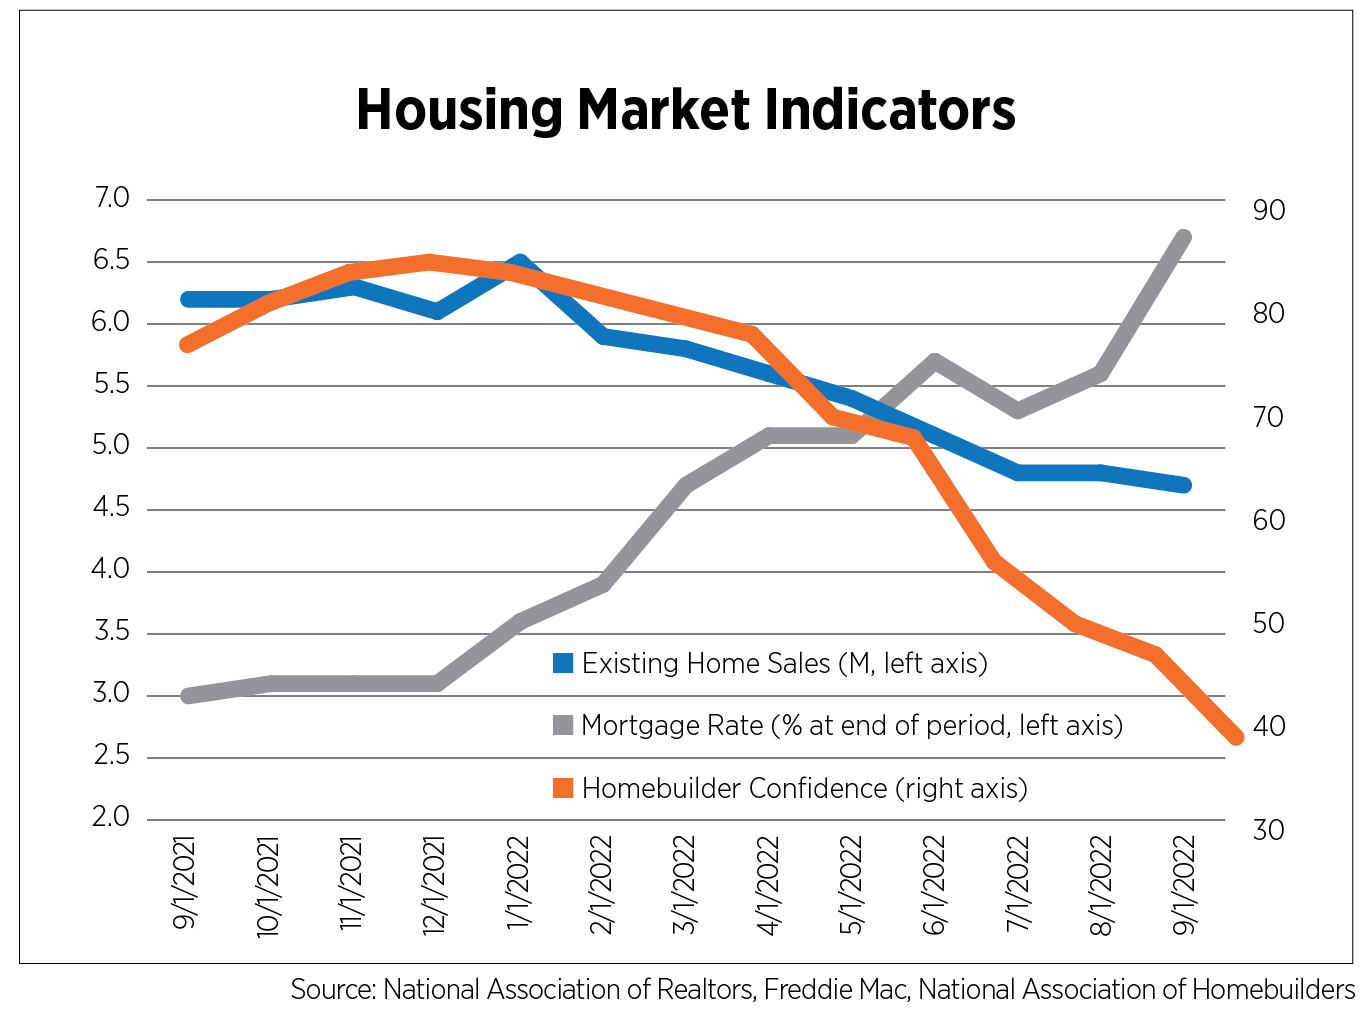 housing market indicators